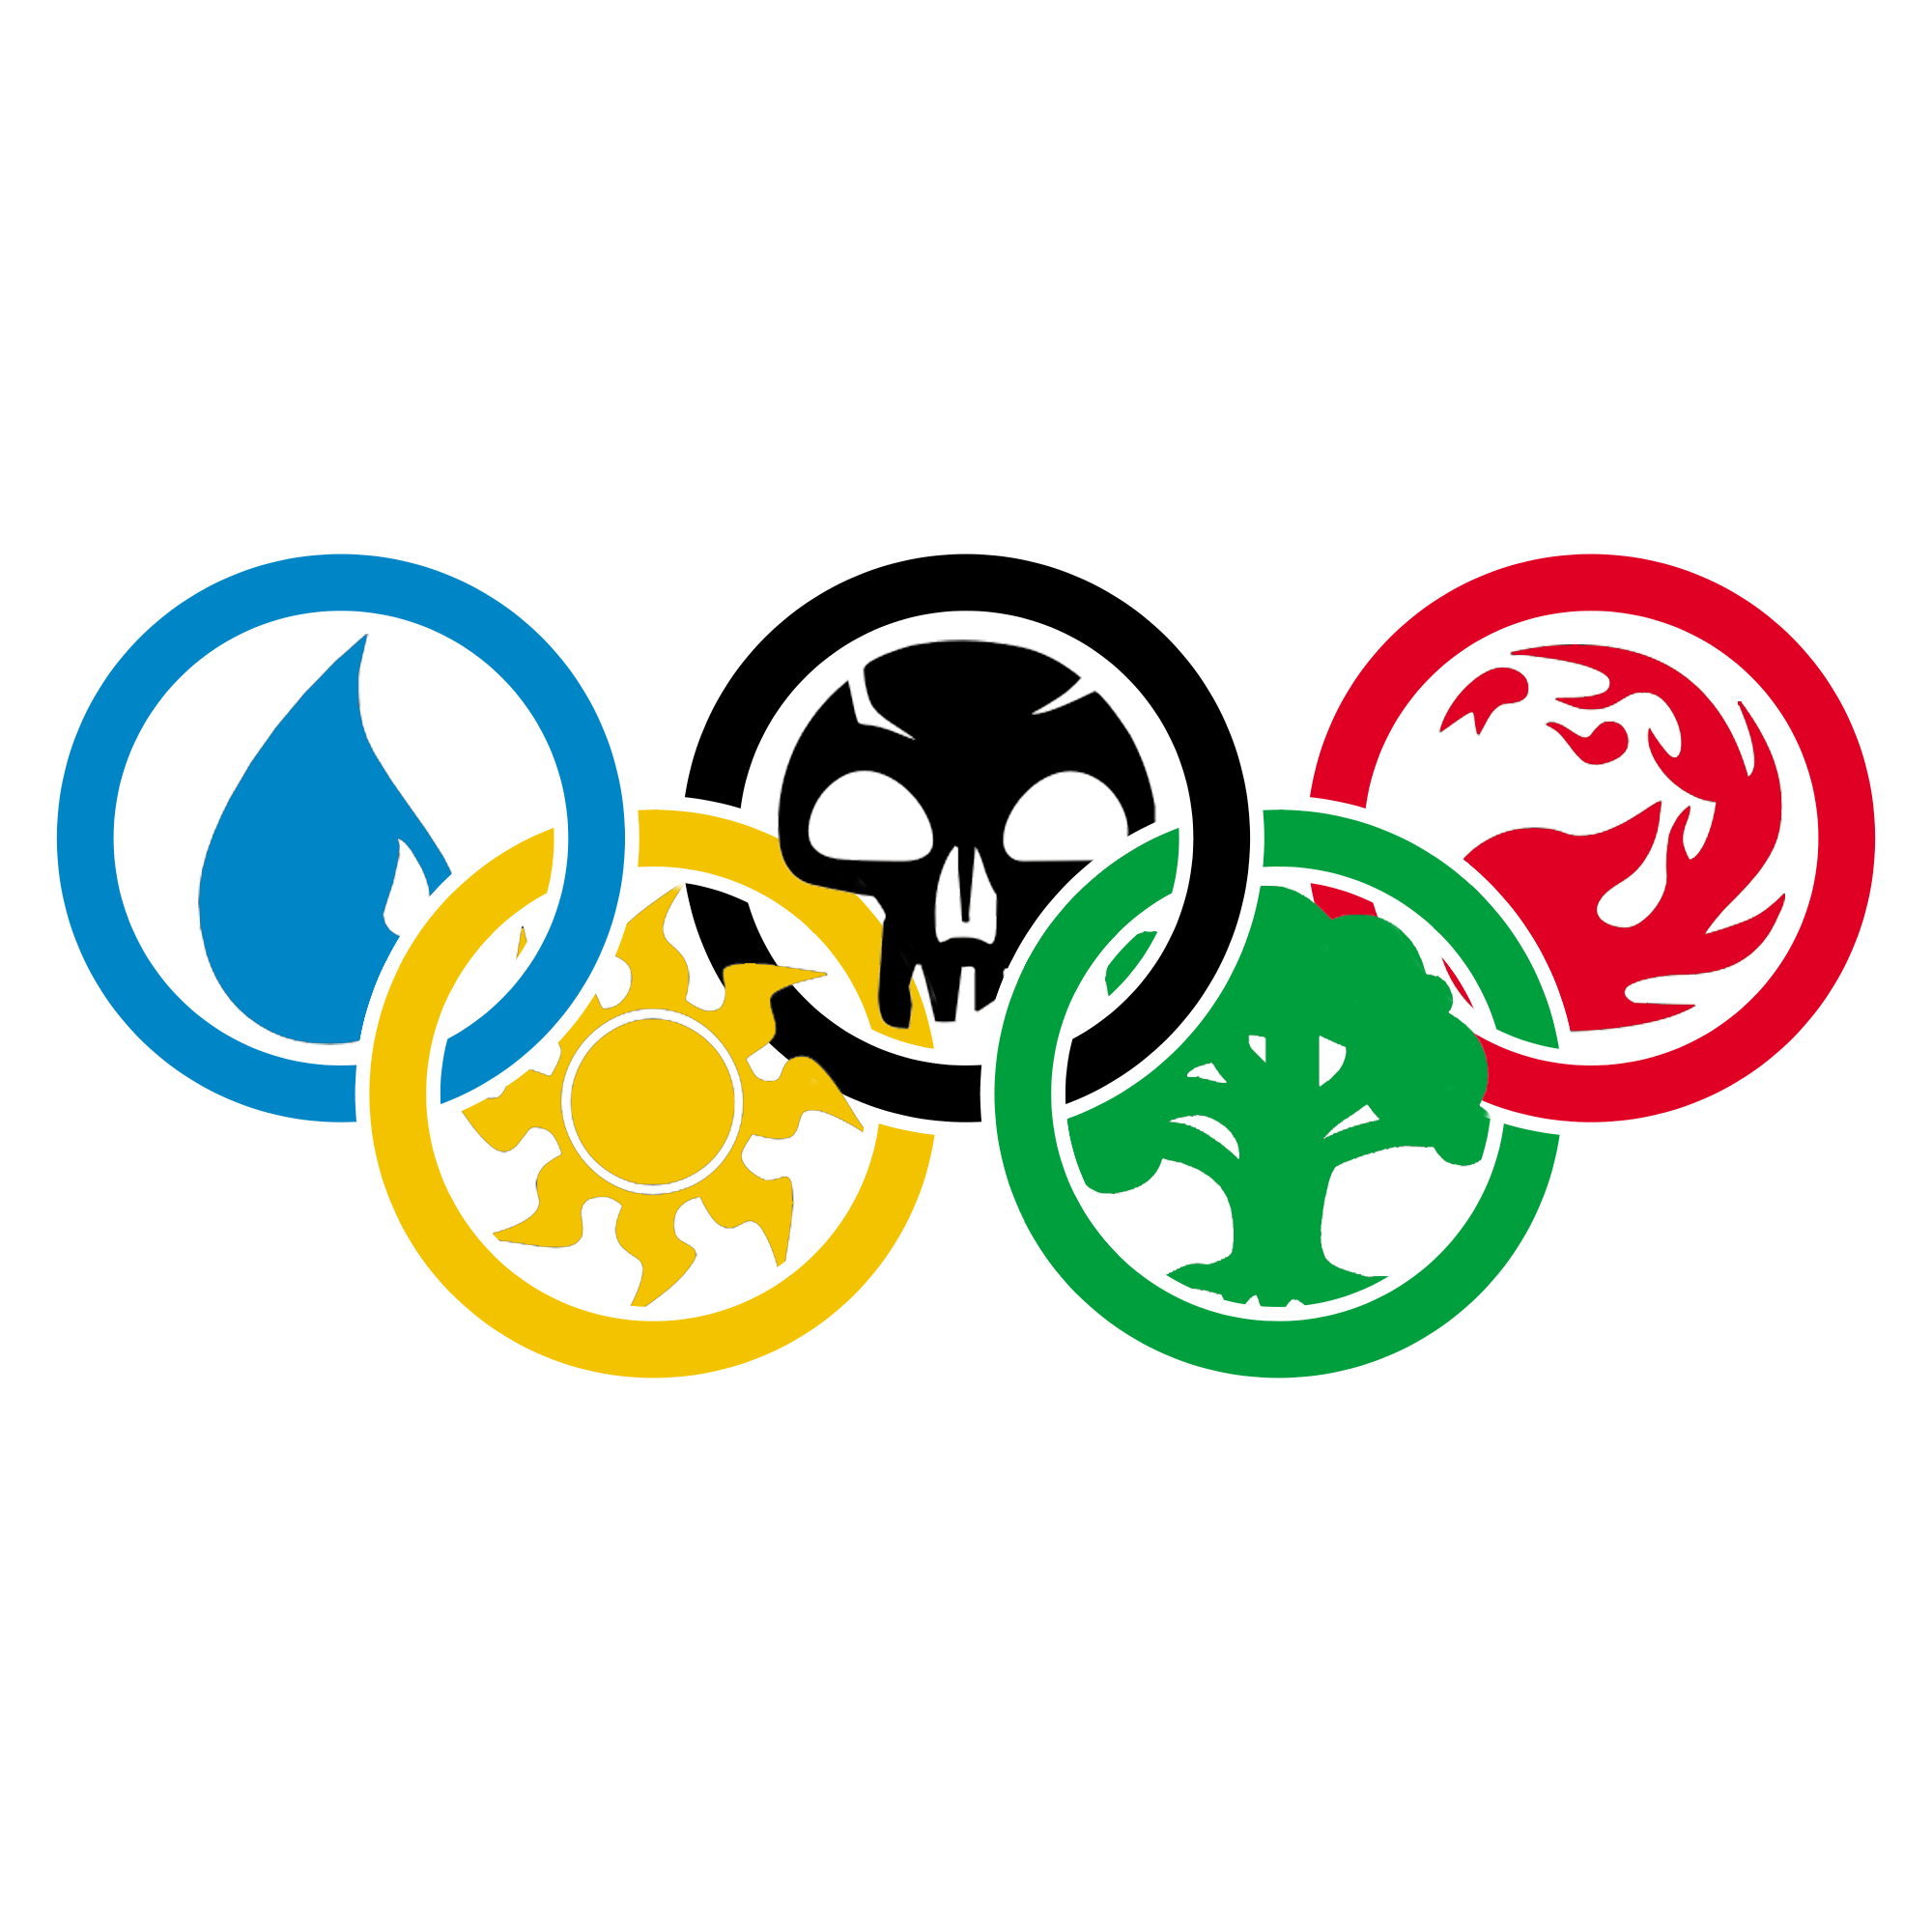 MTG Logo - Magic: The Gathering Olympics Logos (Variants in Olympic and MTG ...